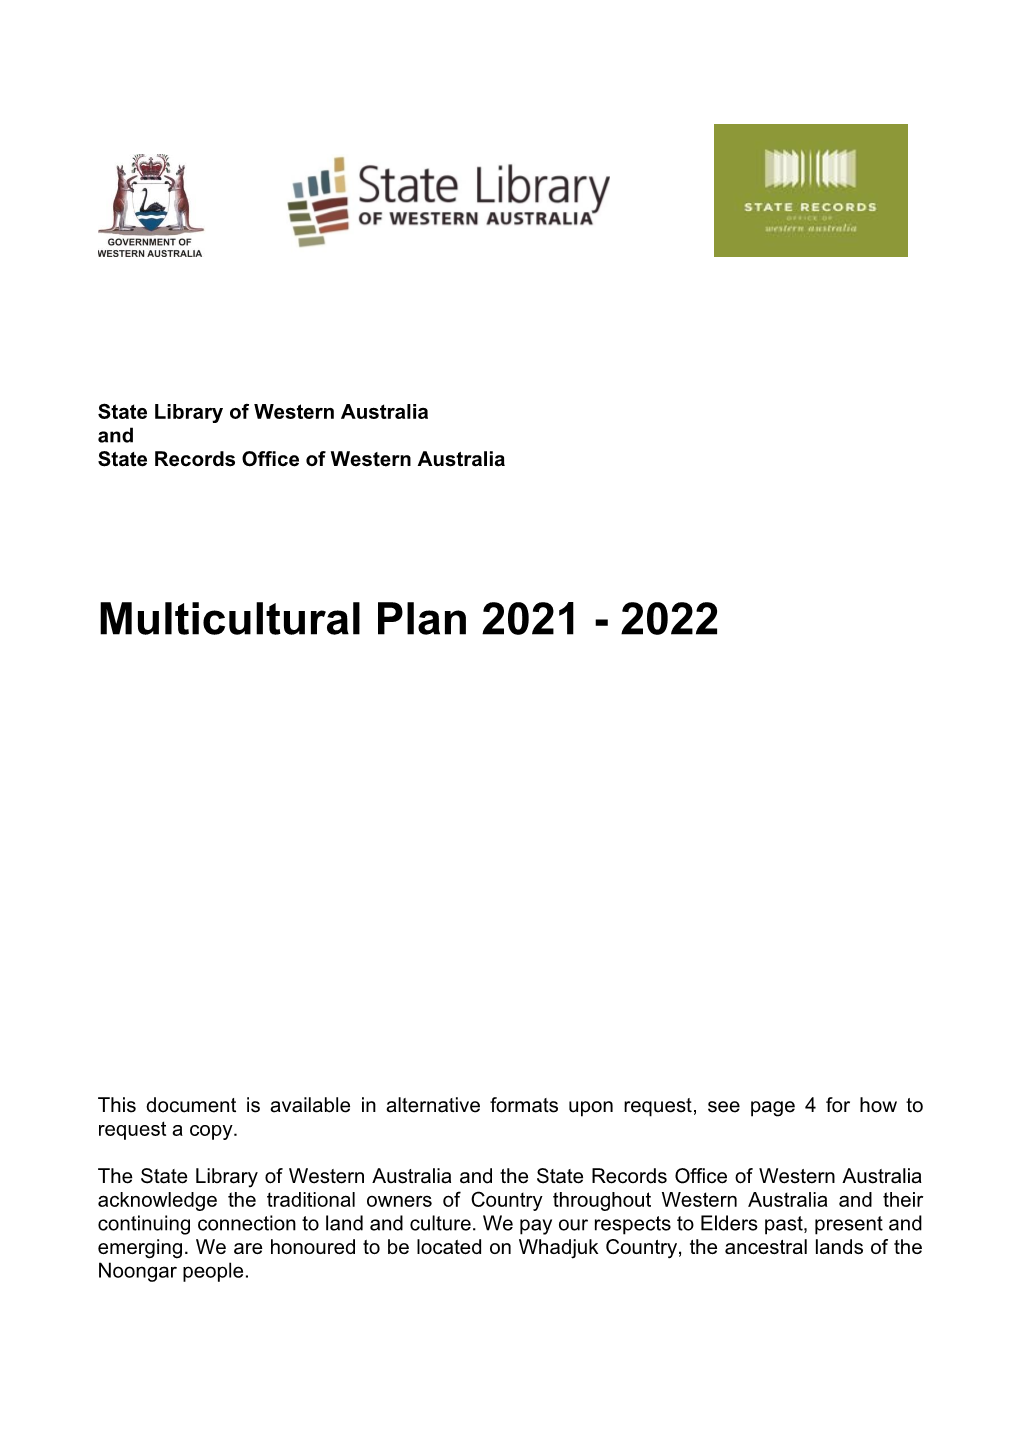 Multicultural Plan 2021 - 2022